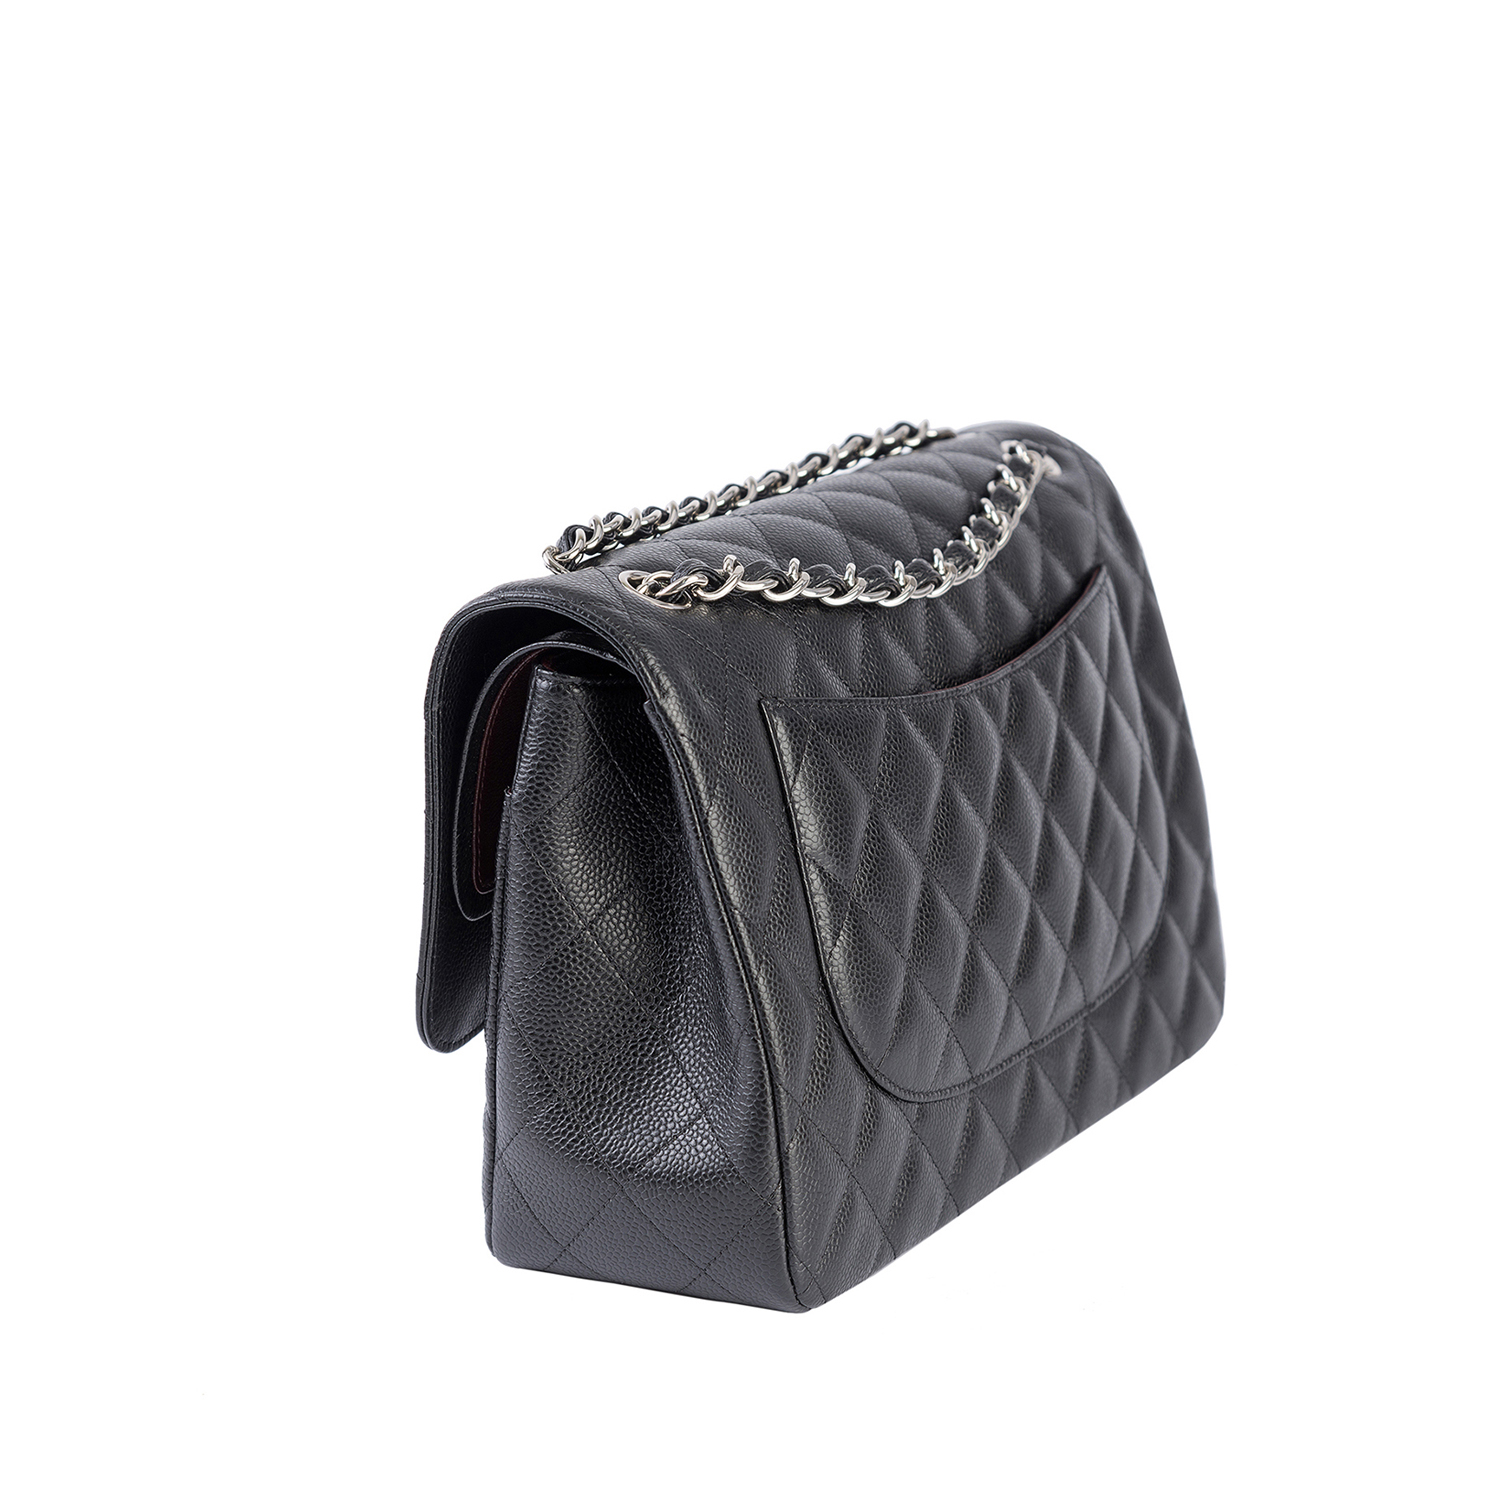 Chanel 2000s Blue Python Mini Flap Bag · INTO